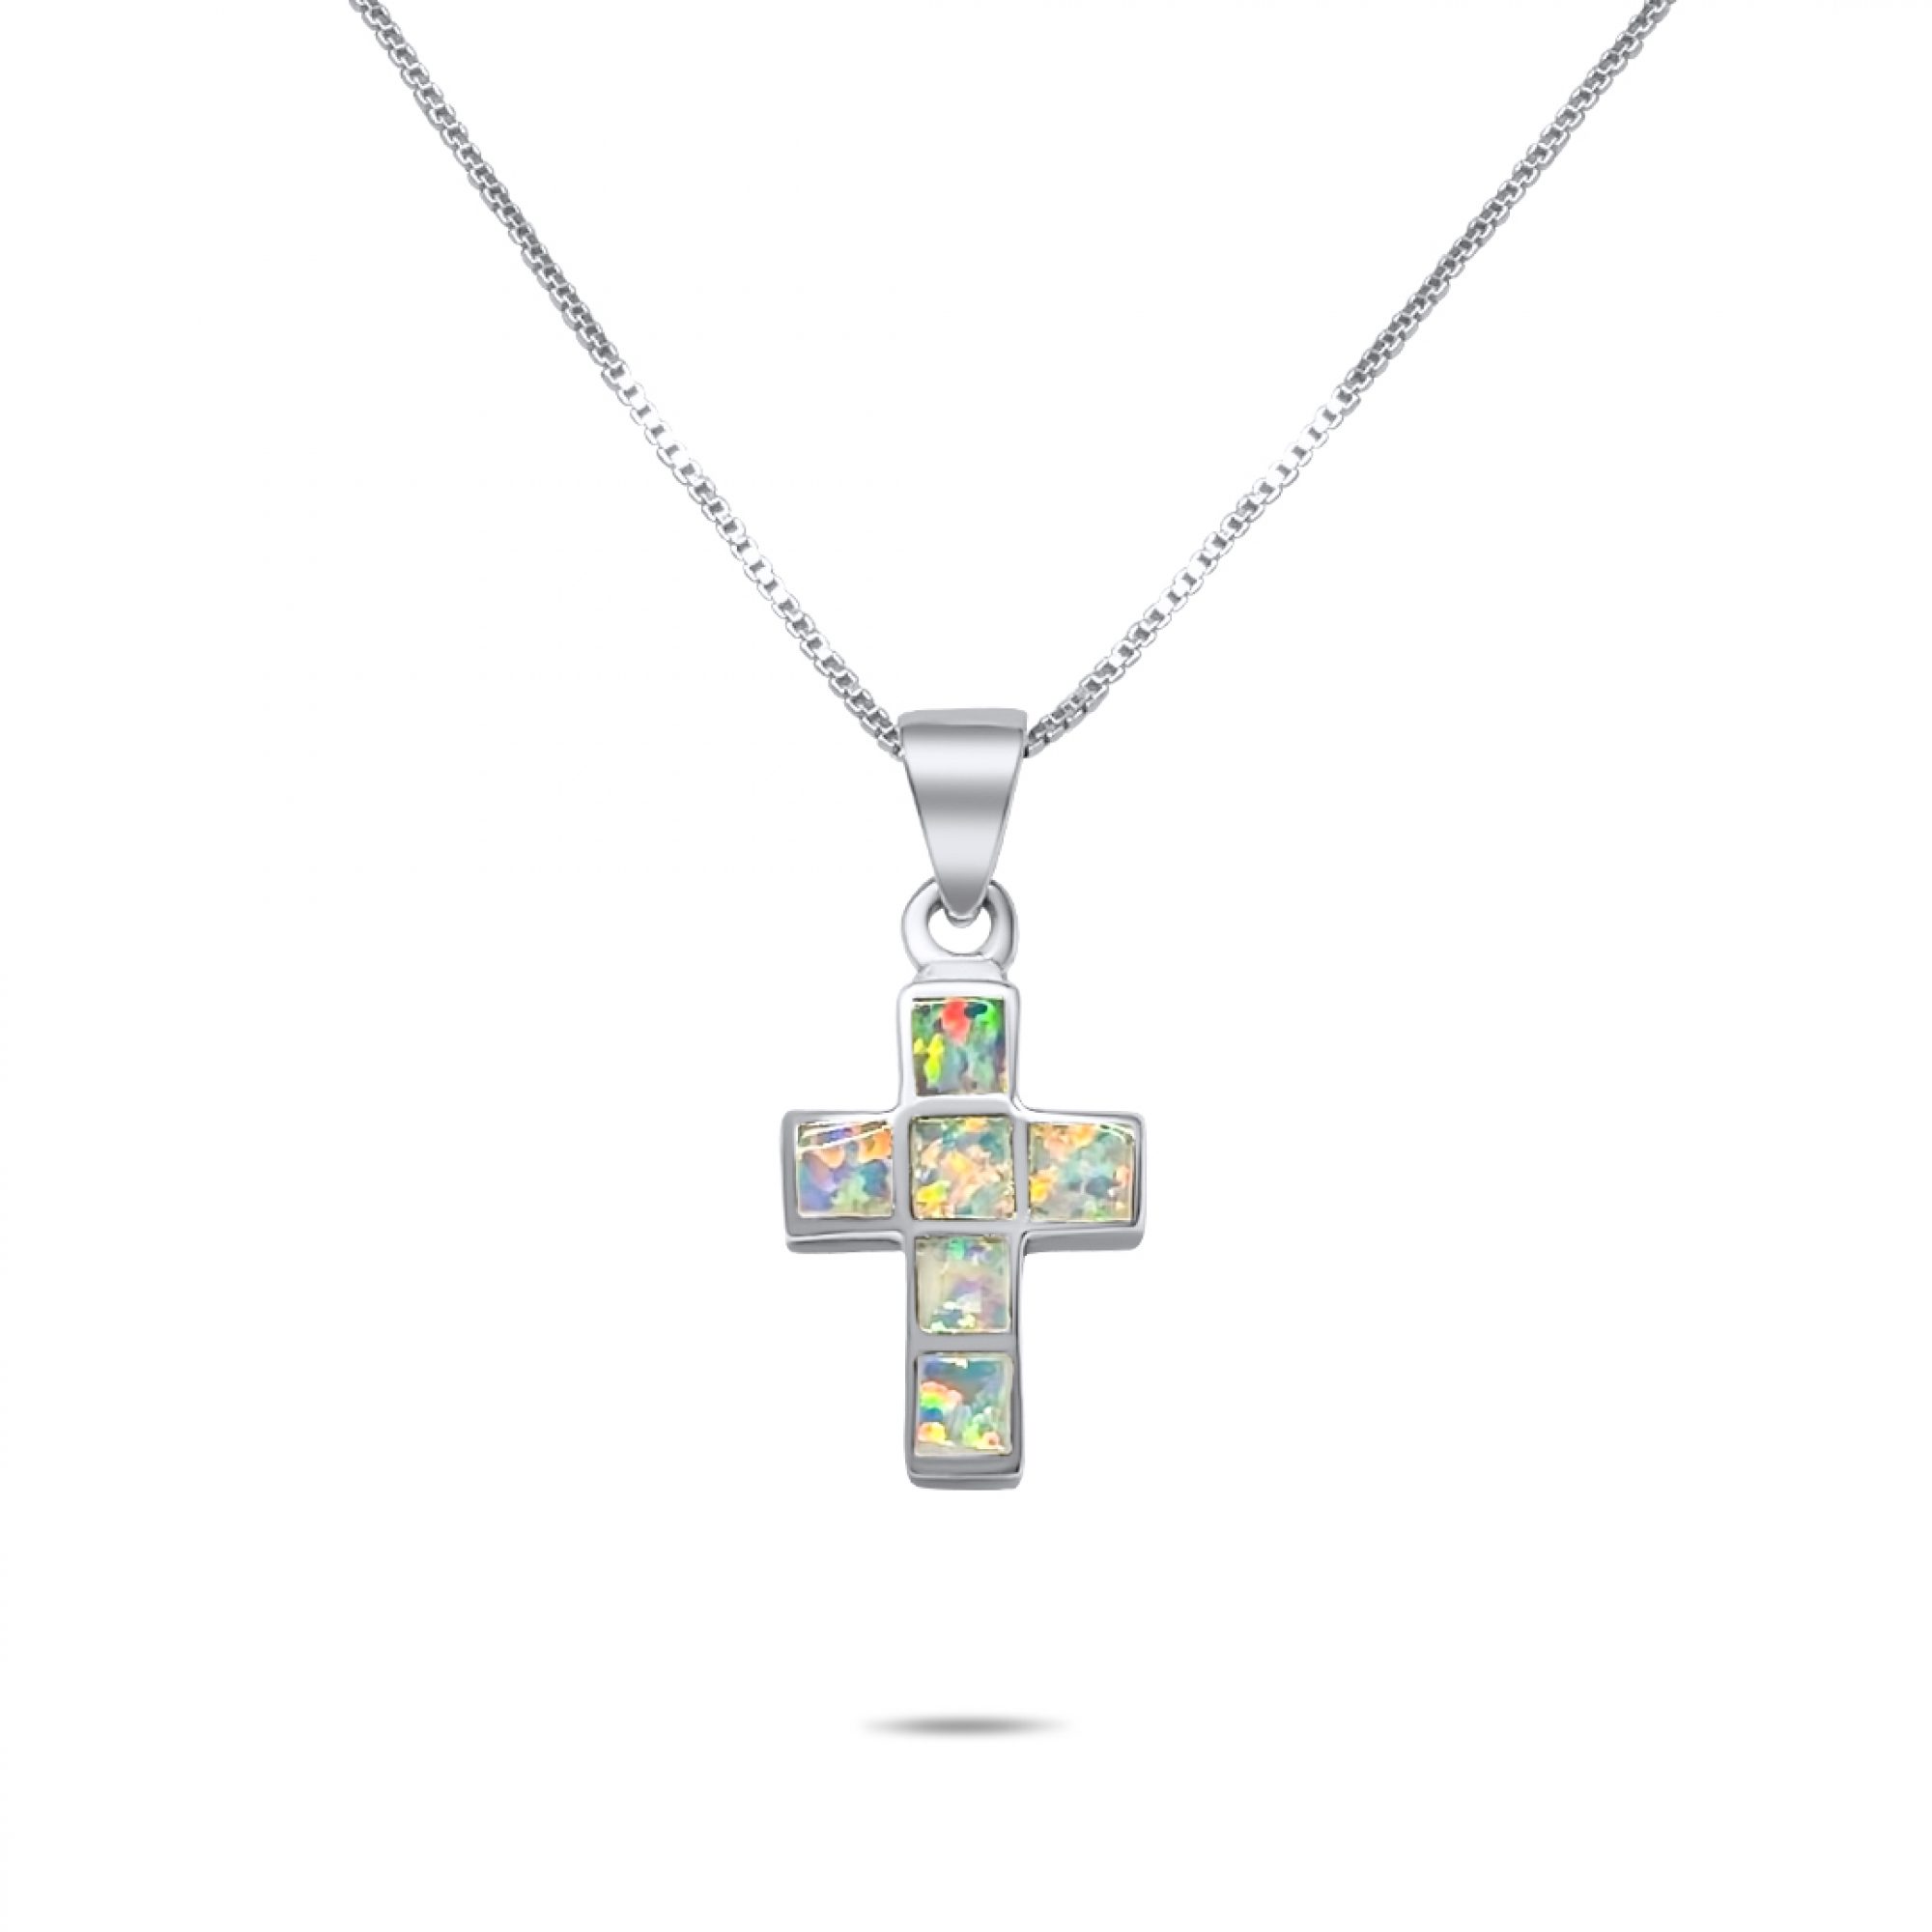 White opal cross pendant